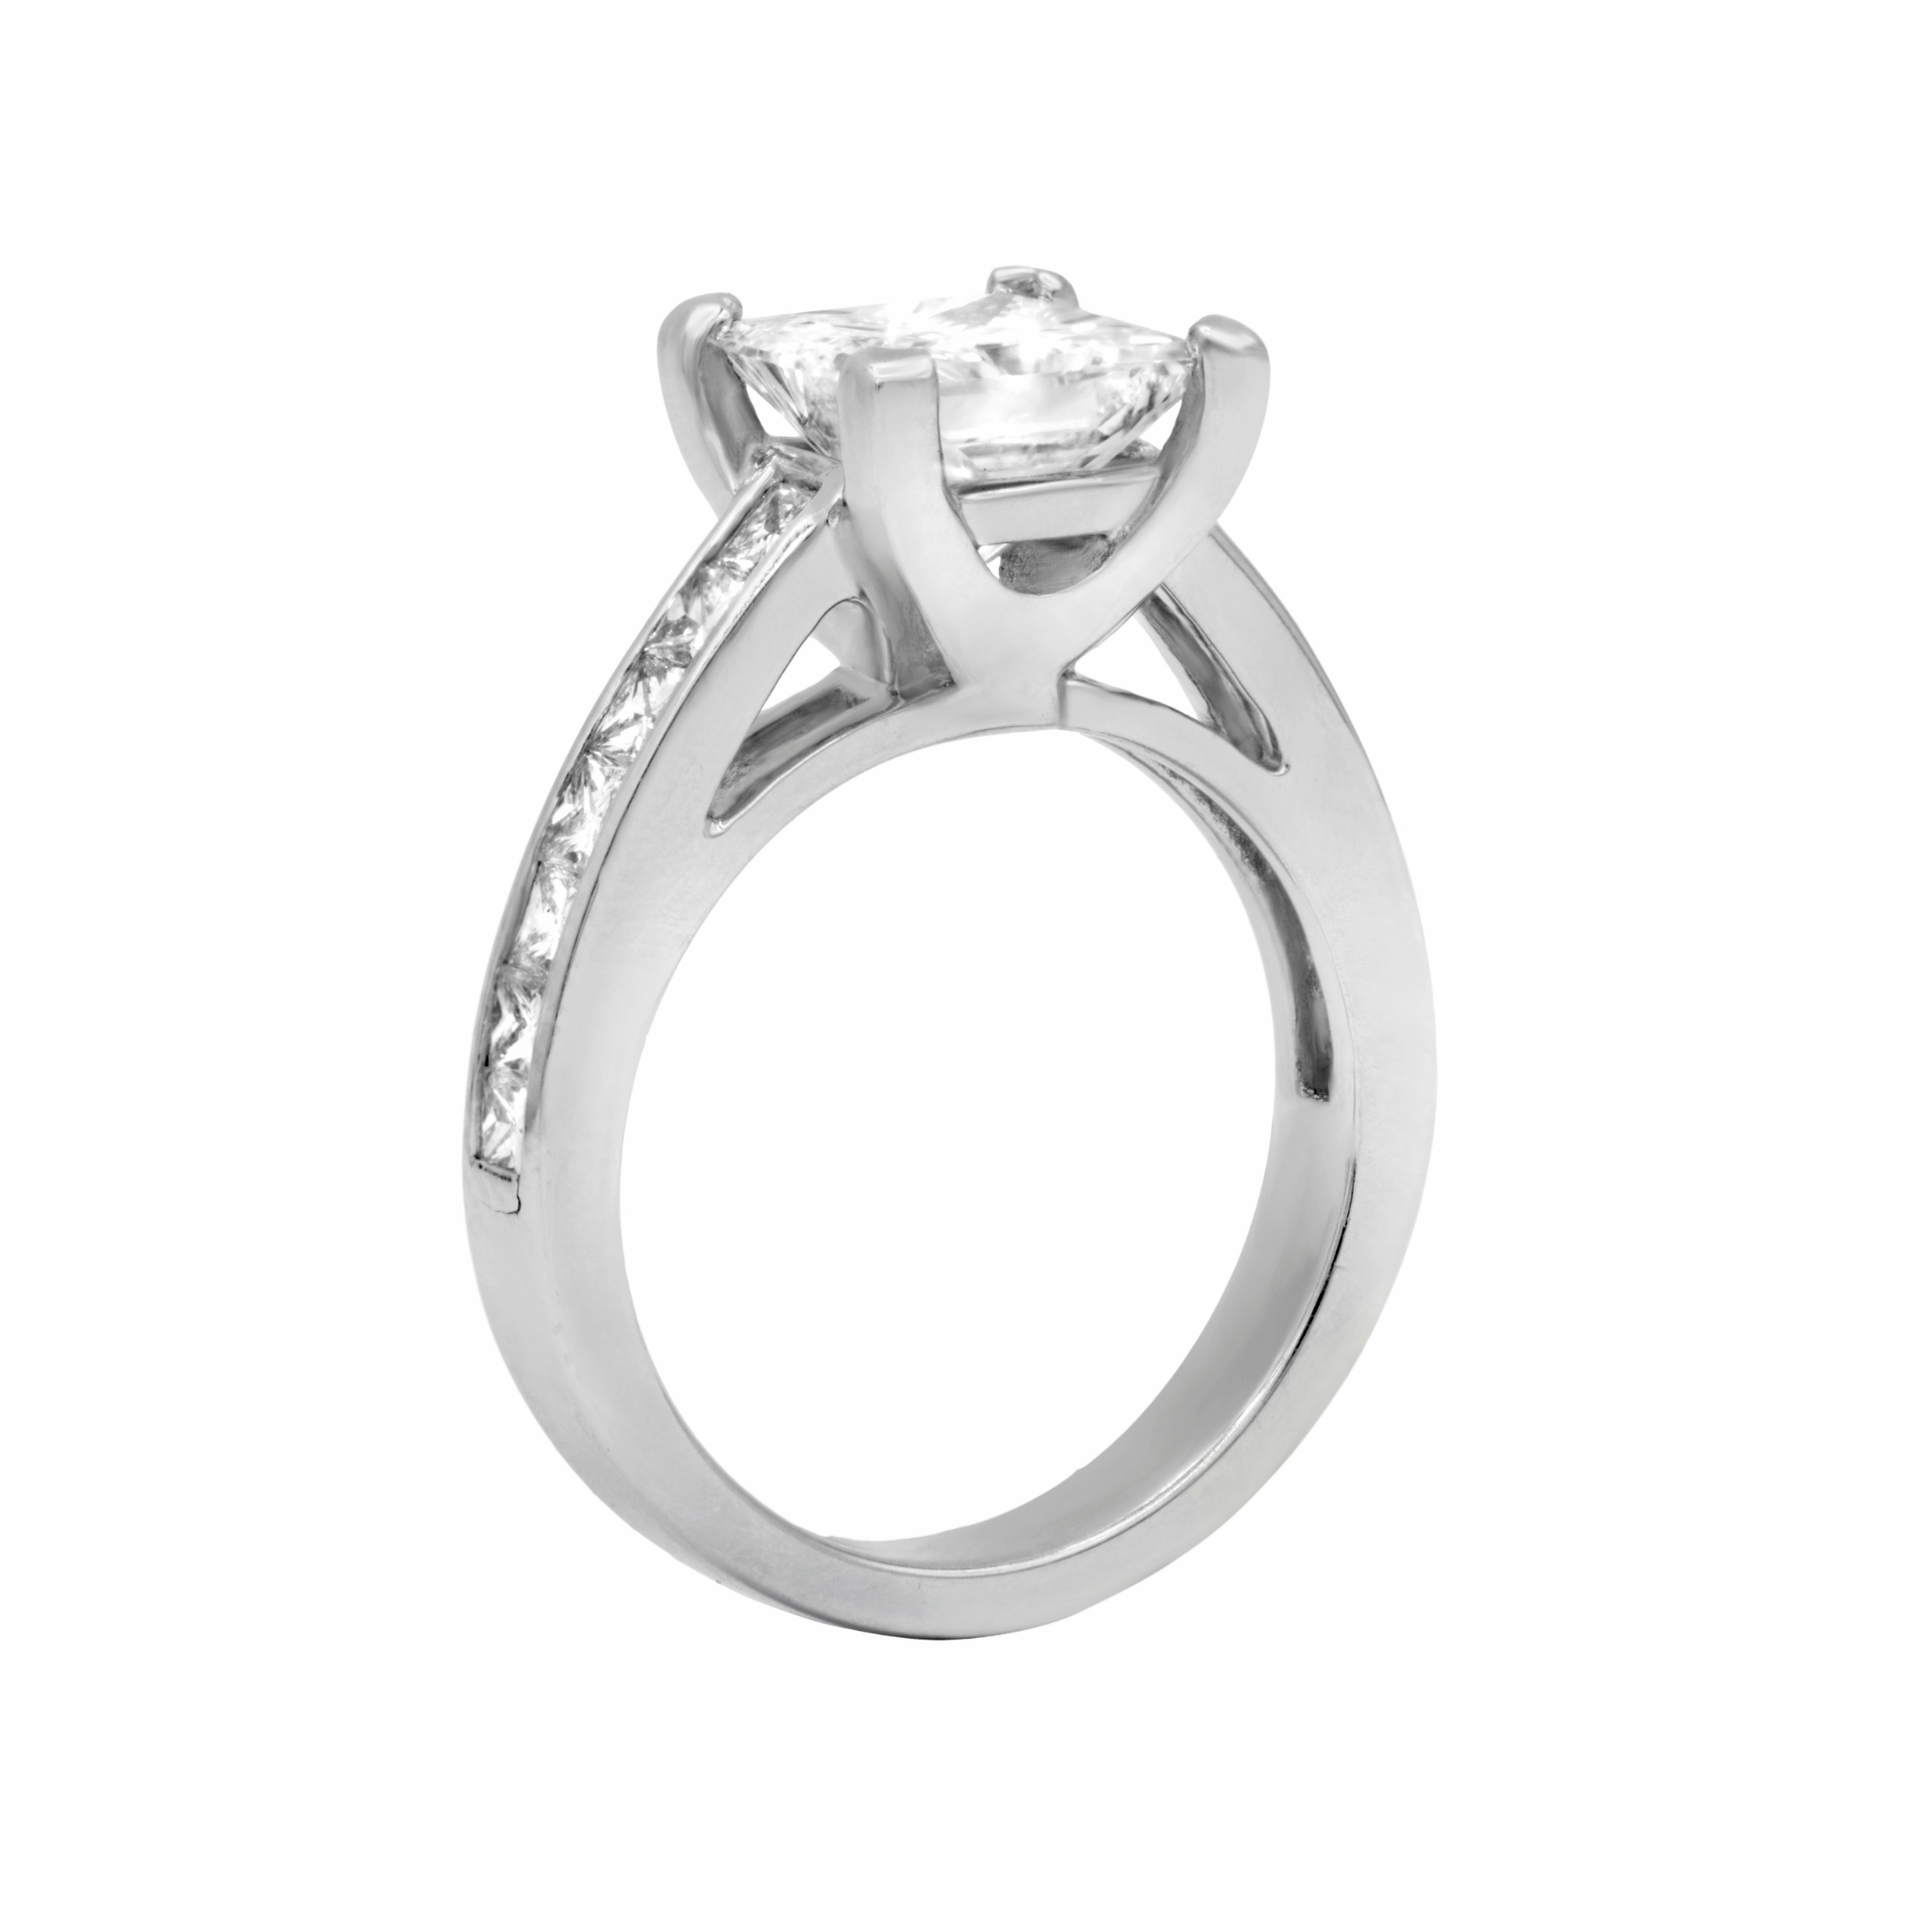 2.39ct Princess Cut Diamond Ring.jpg